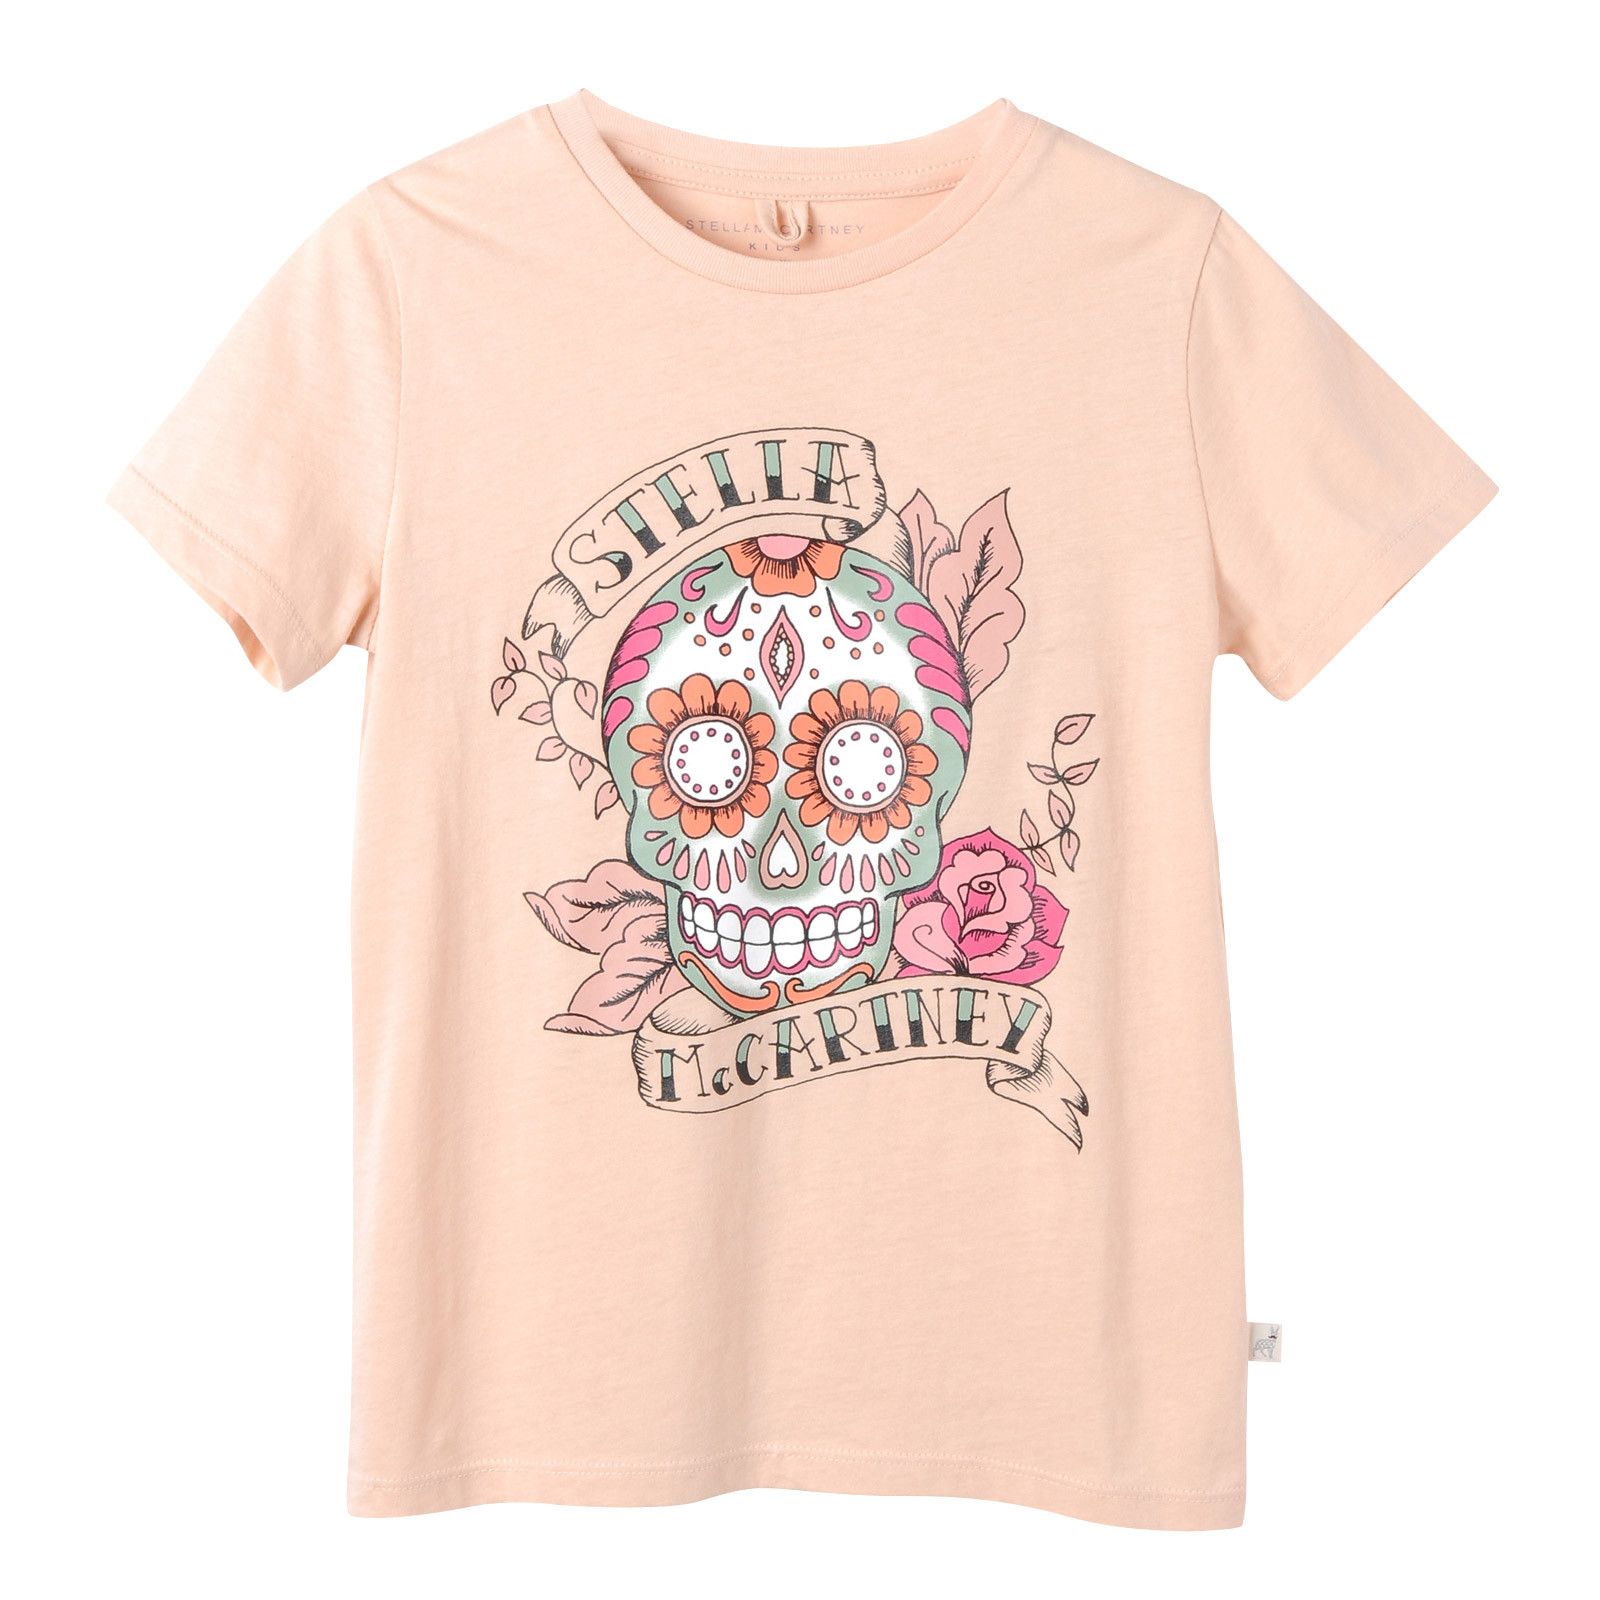 Girls Pink Sugar Skull Printed Cotton T-Shirt - CÉMAROSE | Children's Fashion Store - 1